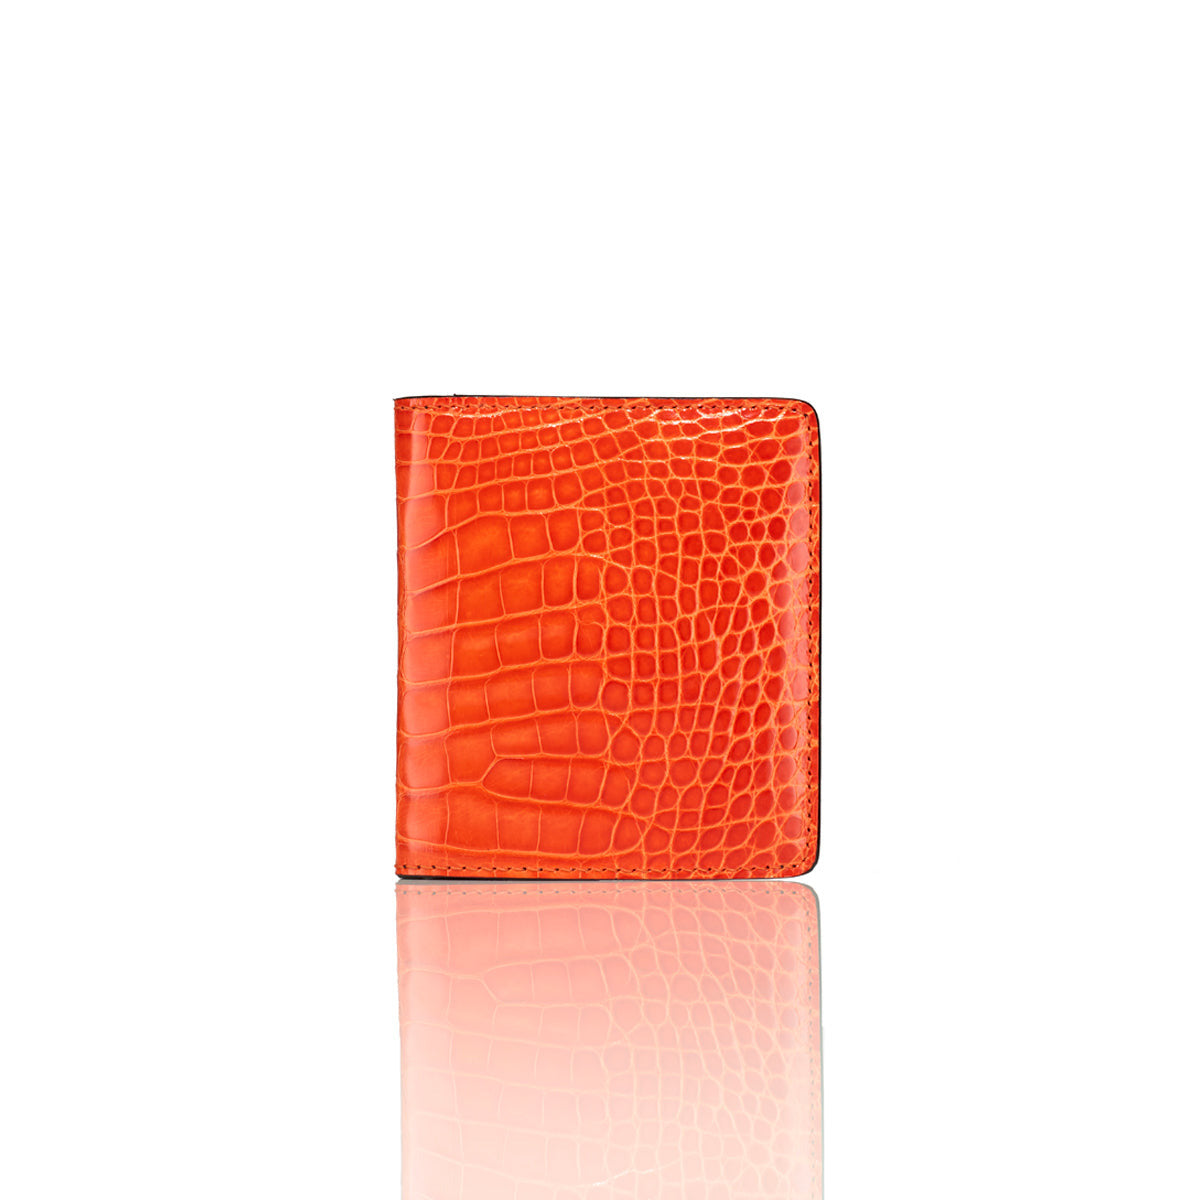 STALVEY Bi-Fold Wallet in Orange Alligator